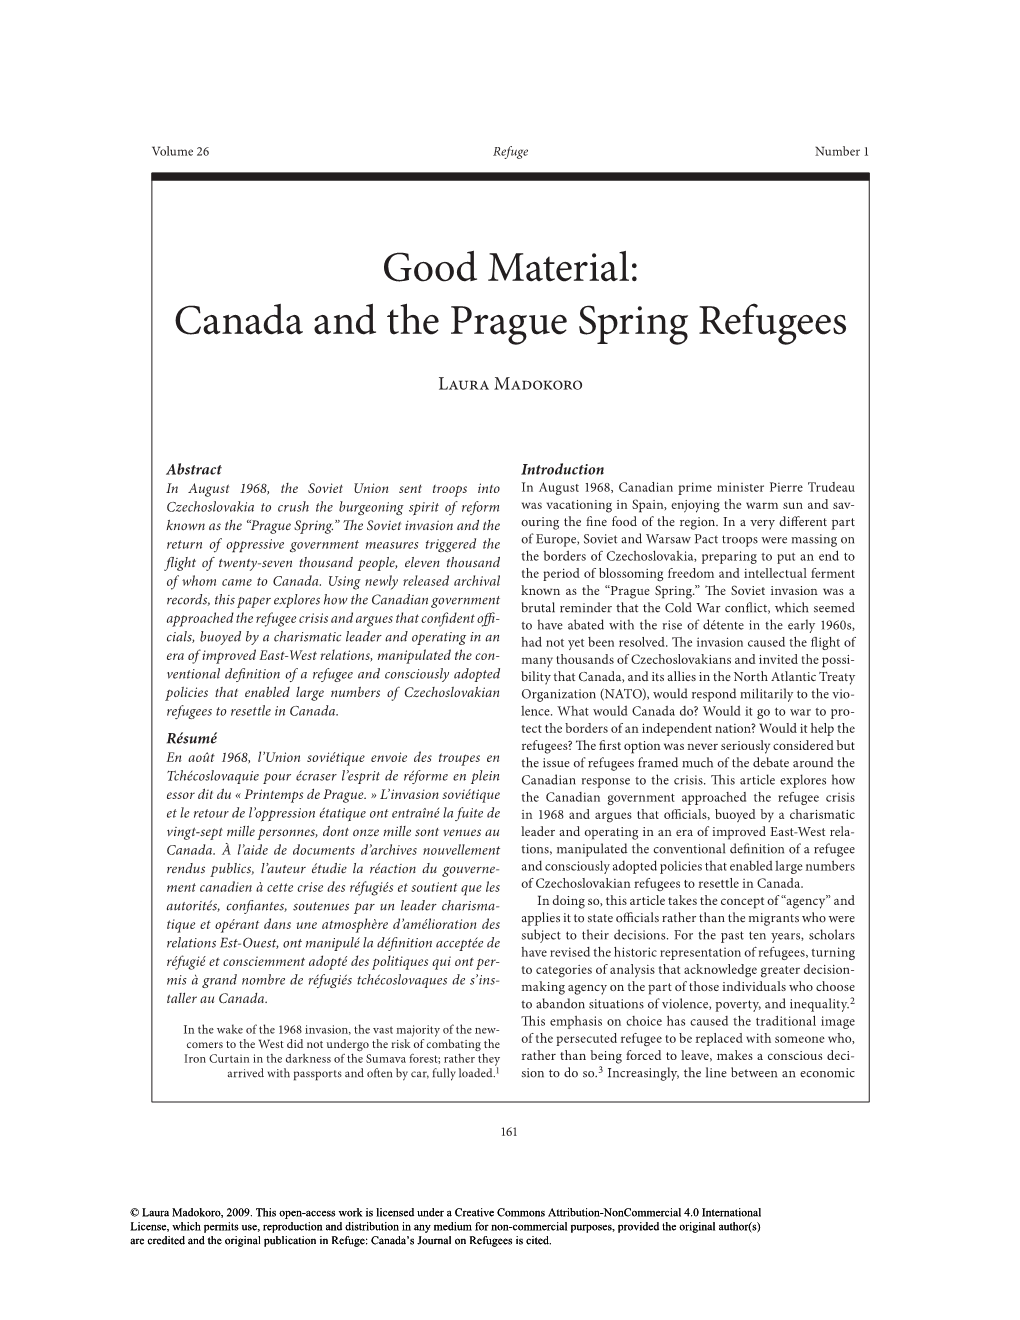 Good Material: Canada and the Prague Spring Refugees